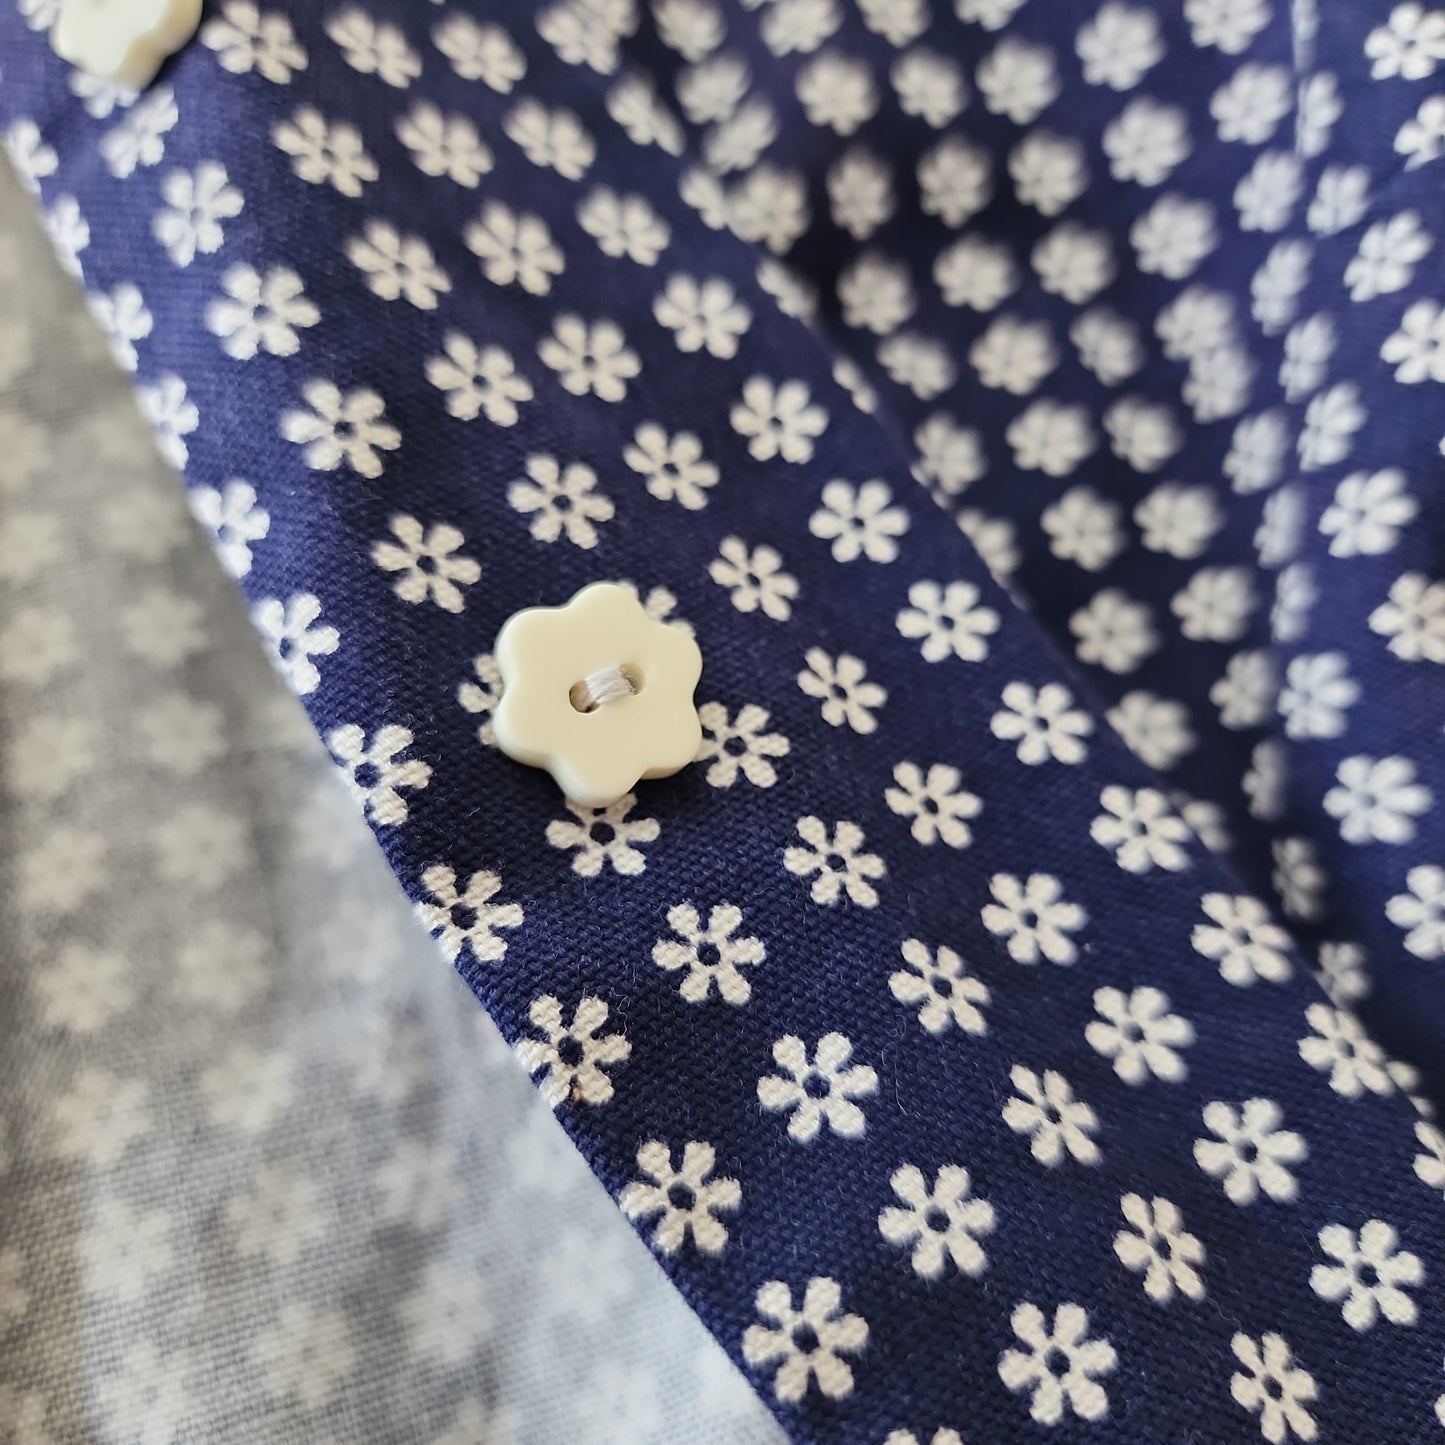 70s Summer Crop Top Button Down / Sleeveless Shirt in Navy Blue w/White Flowers